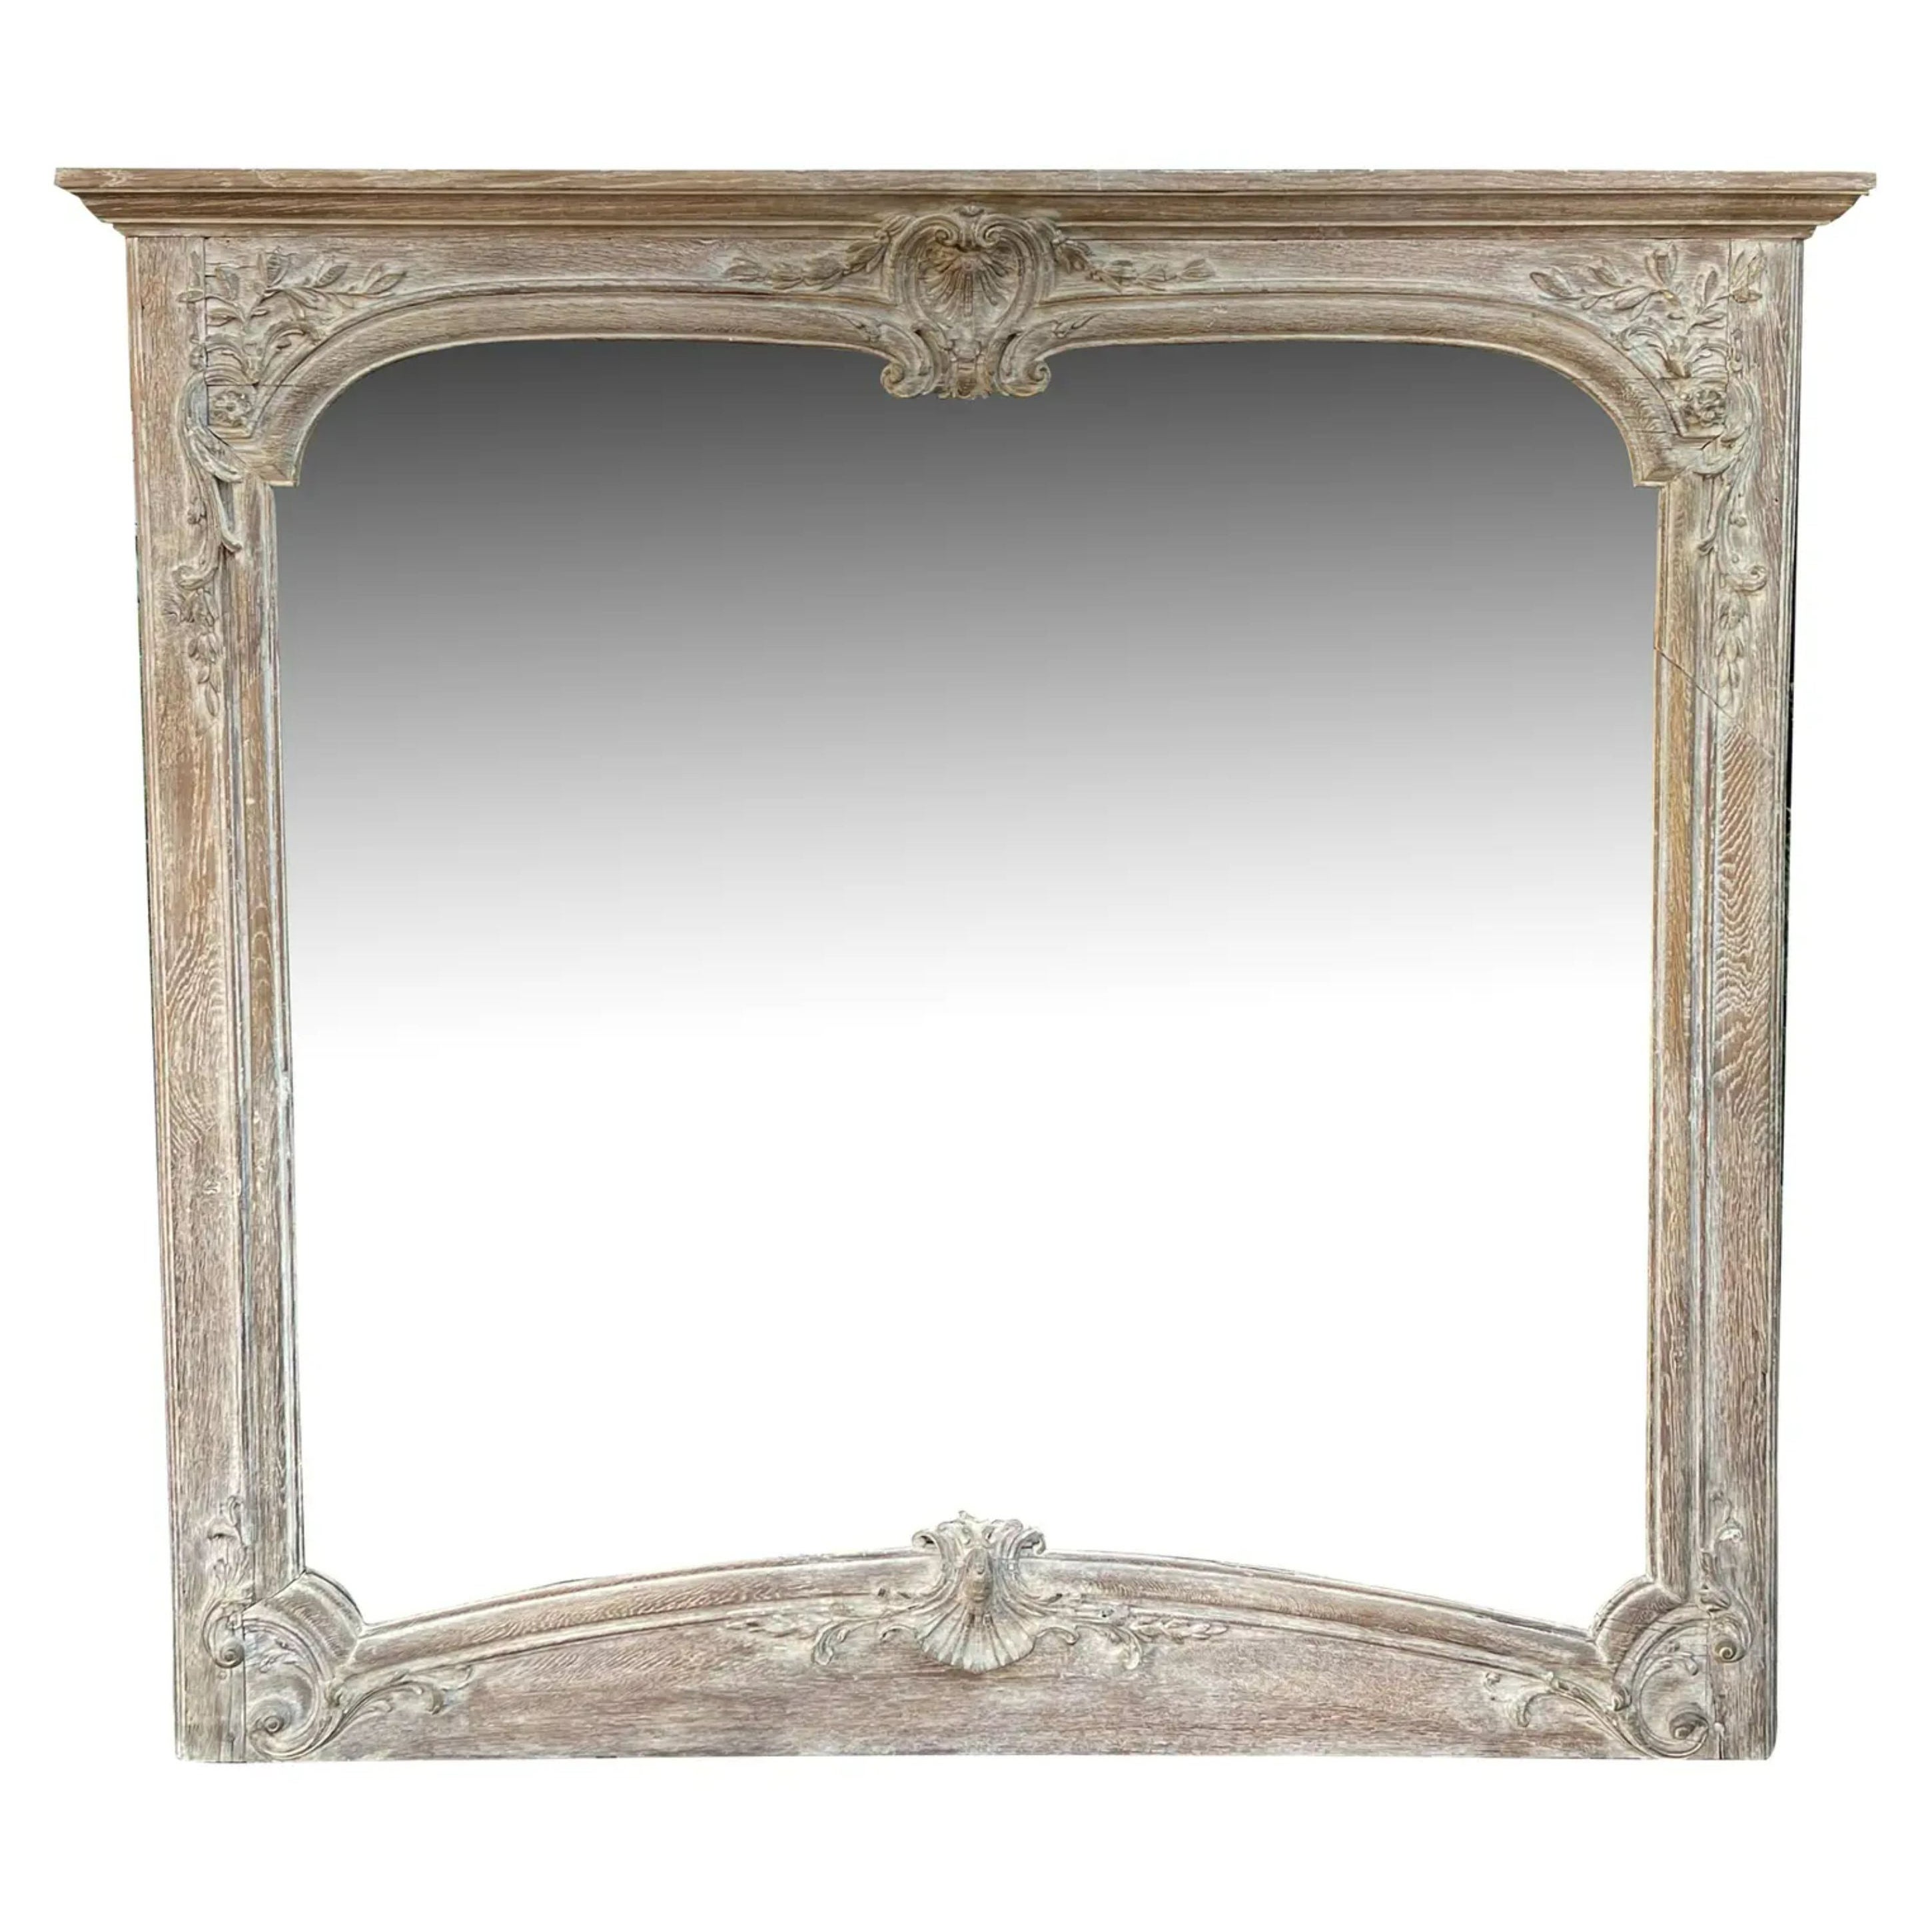 Antique Gustavian Style Swedish Empire Mantel Mirror, 19th Century